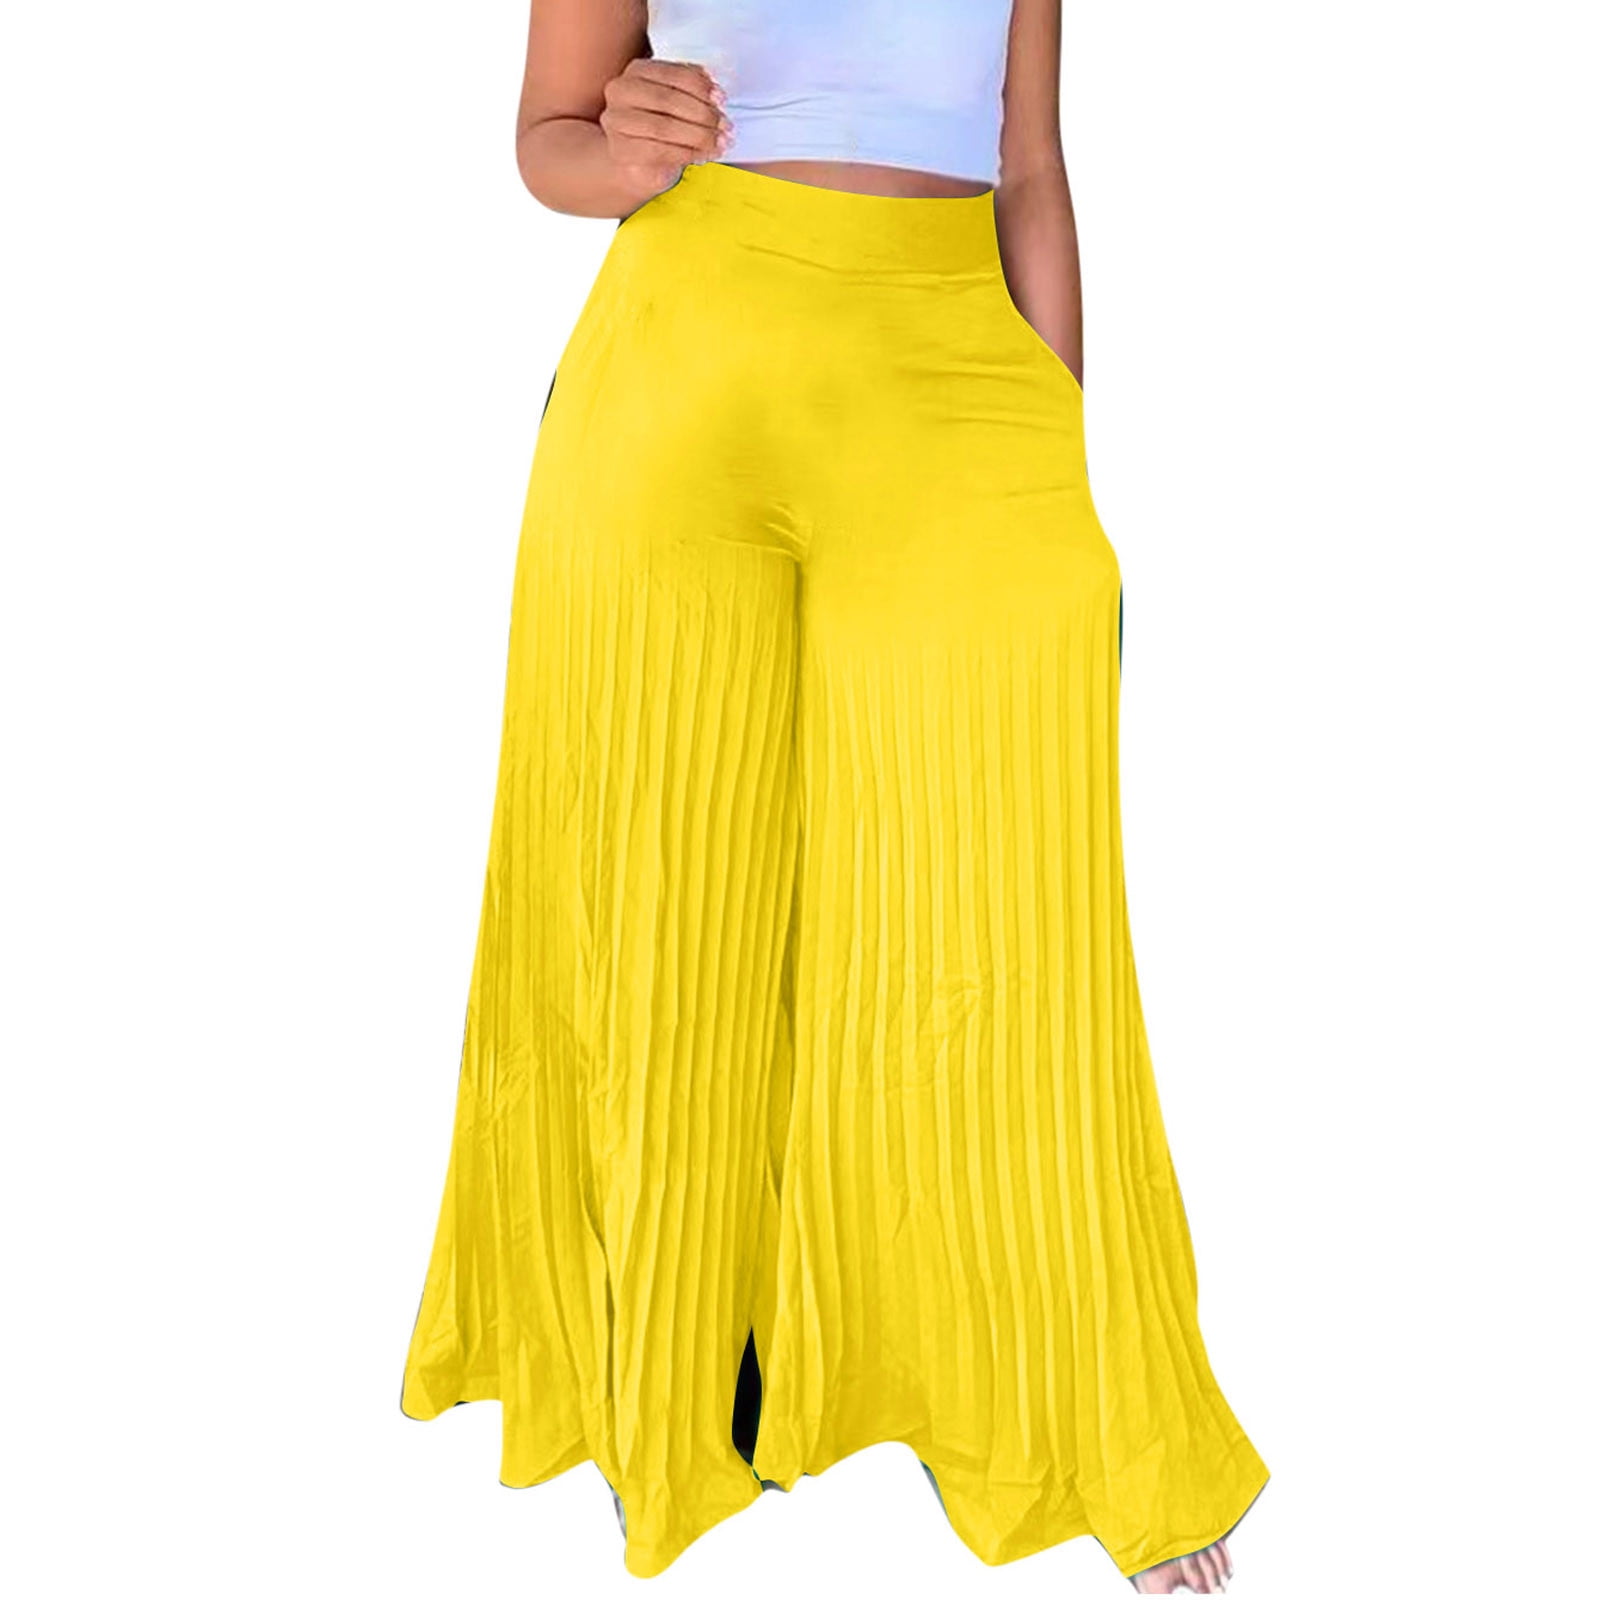 SSAAVKUY Womens Fashion Summer Casual Solid Chiffon Pockets